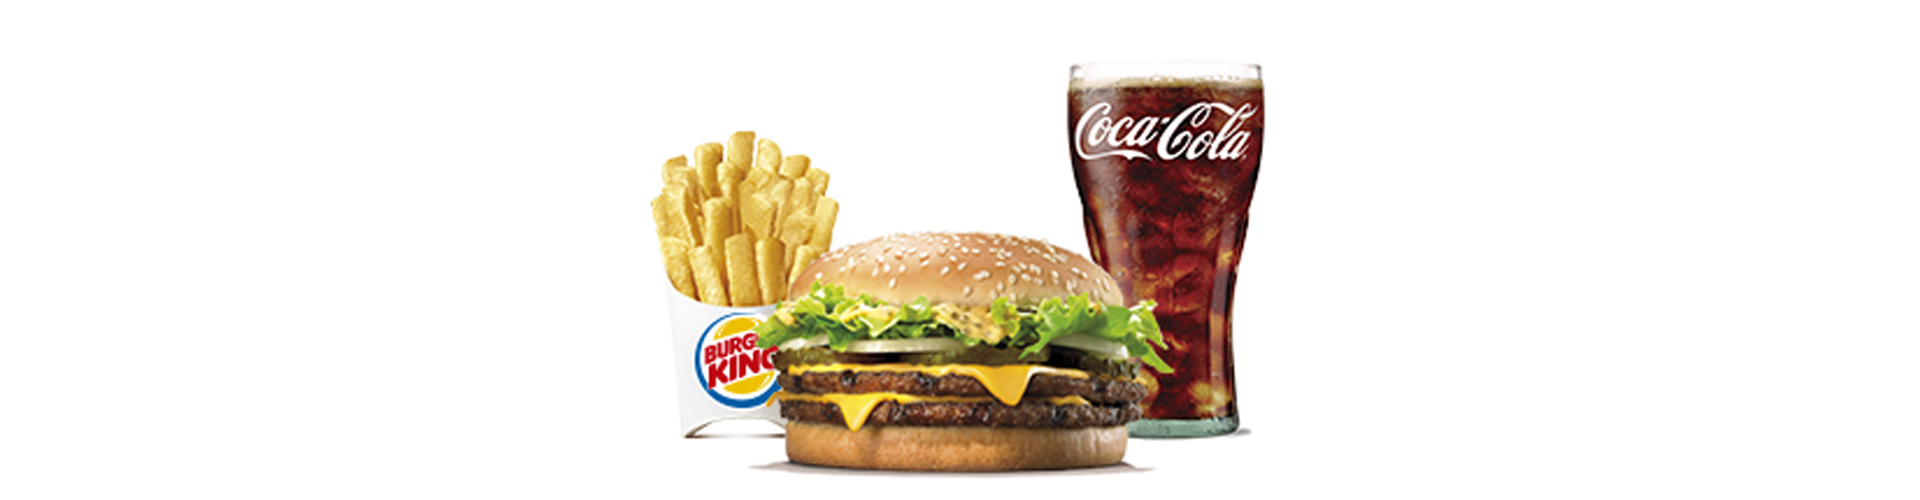 menu-big-king-burgerking-40001712